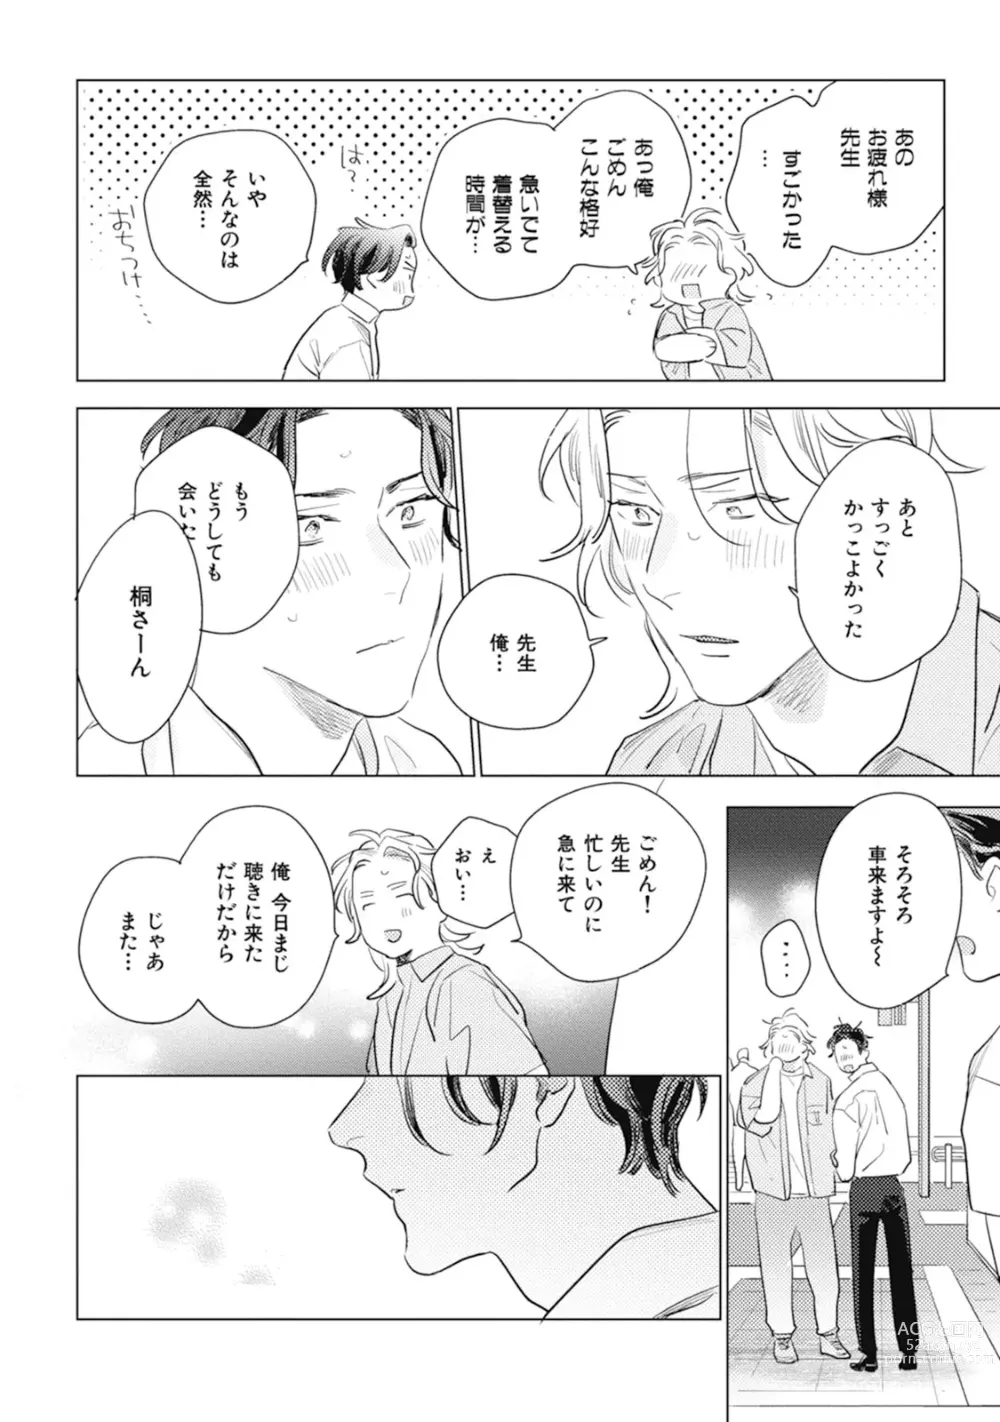 Page 202 of manga Kurikaeshi Ai no Oto